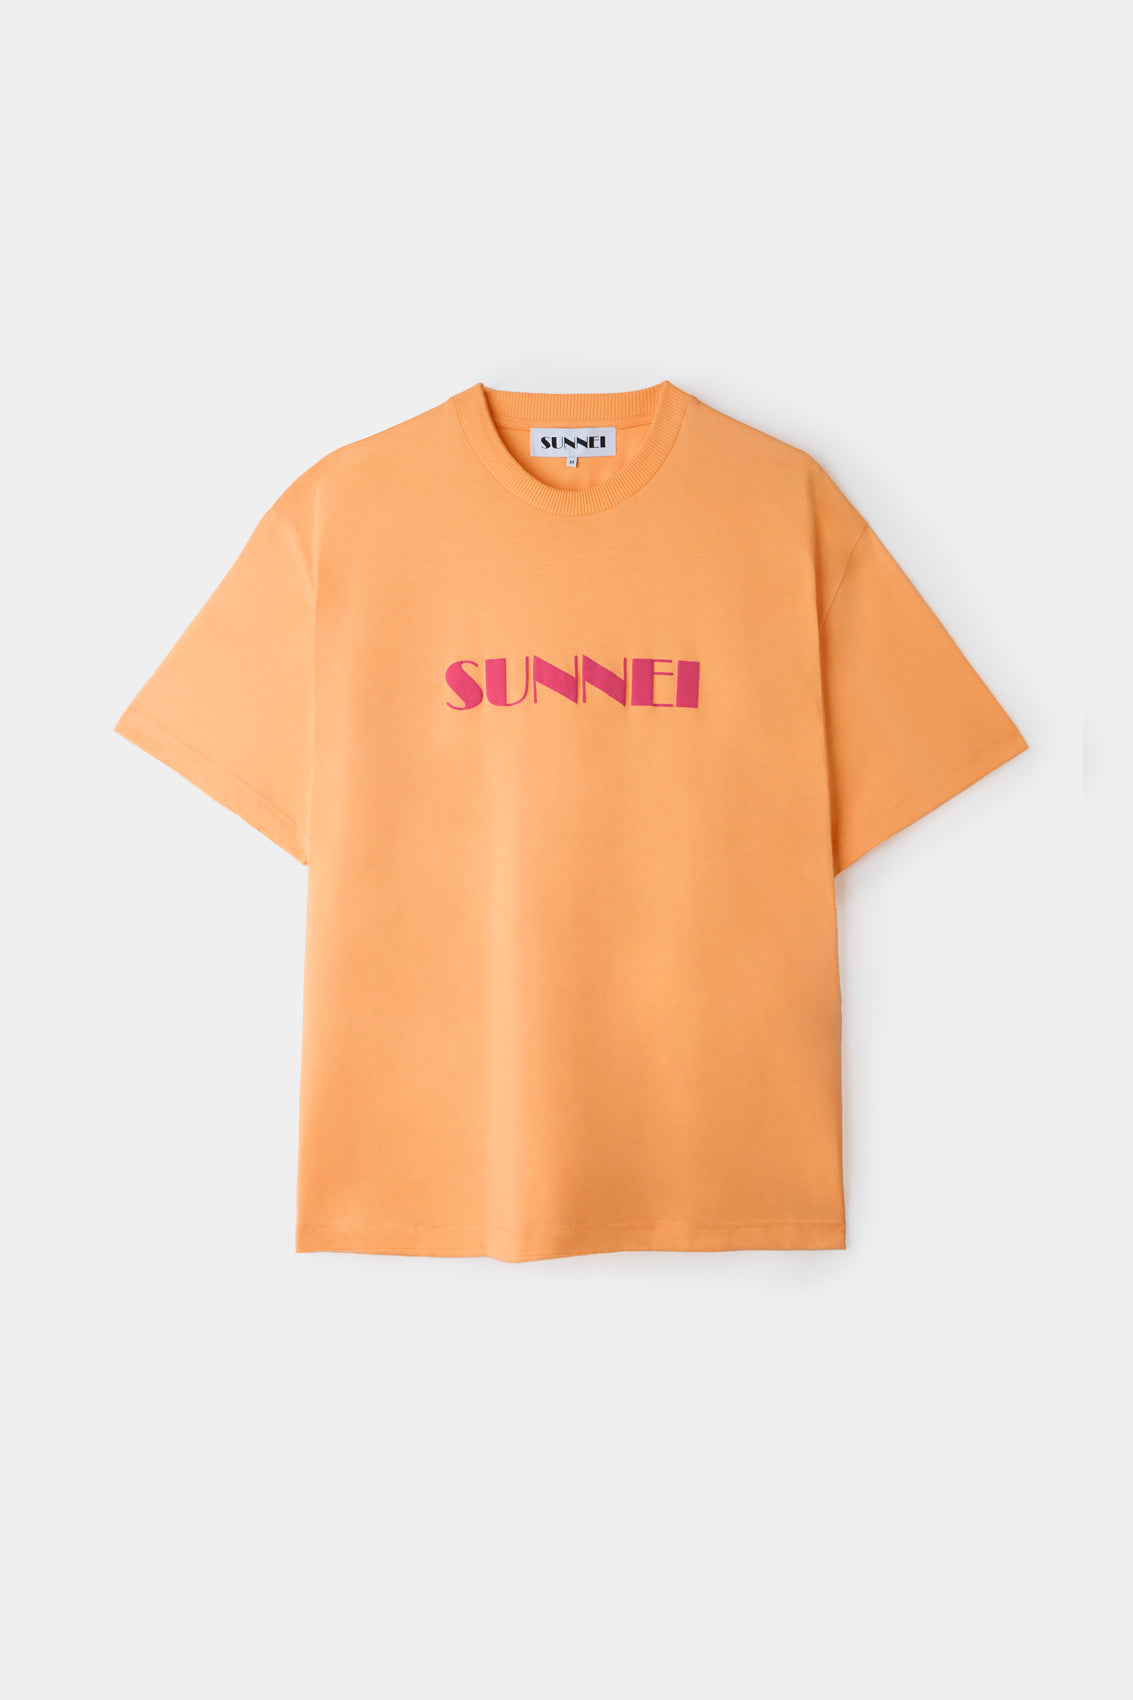 Shop – SUNNEI